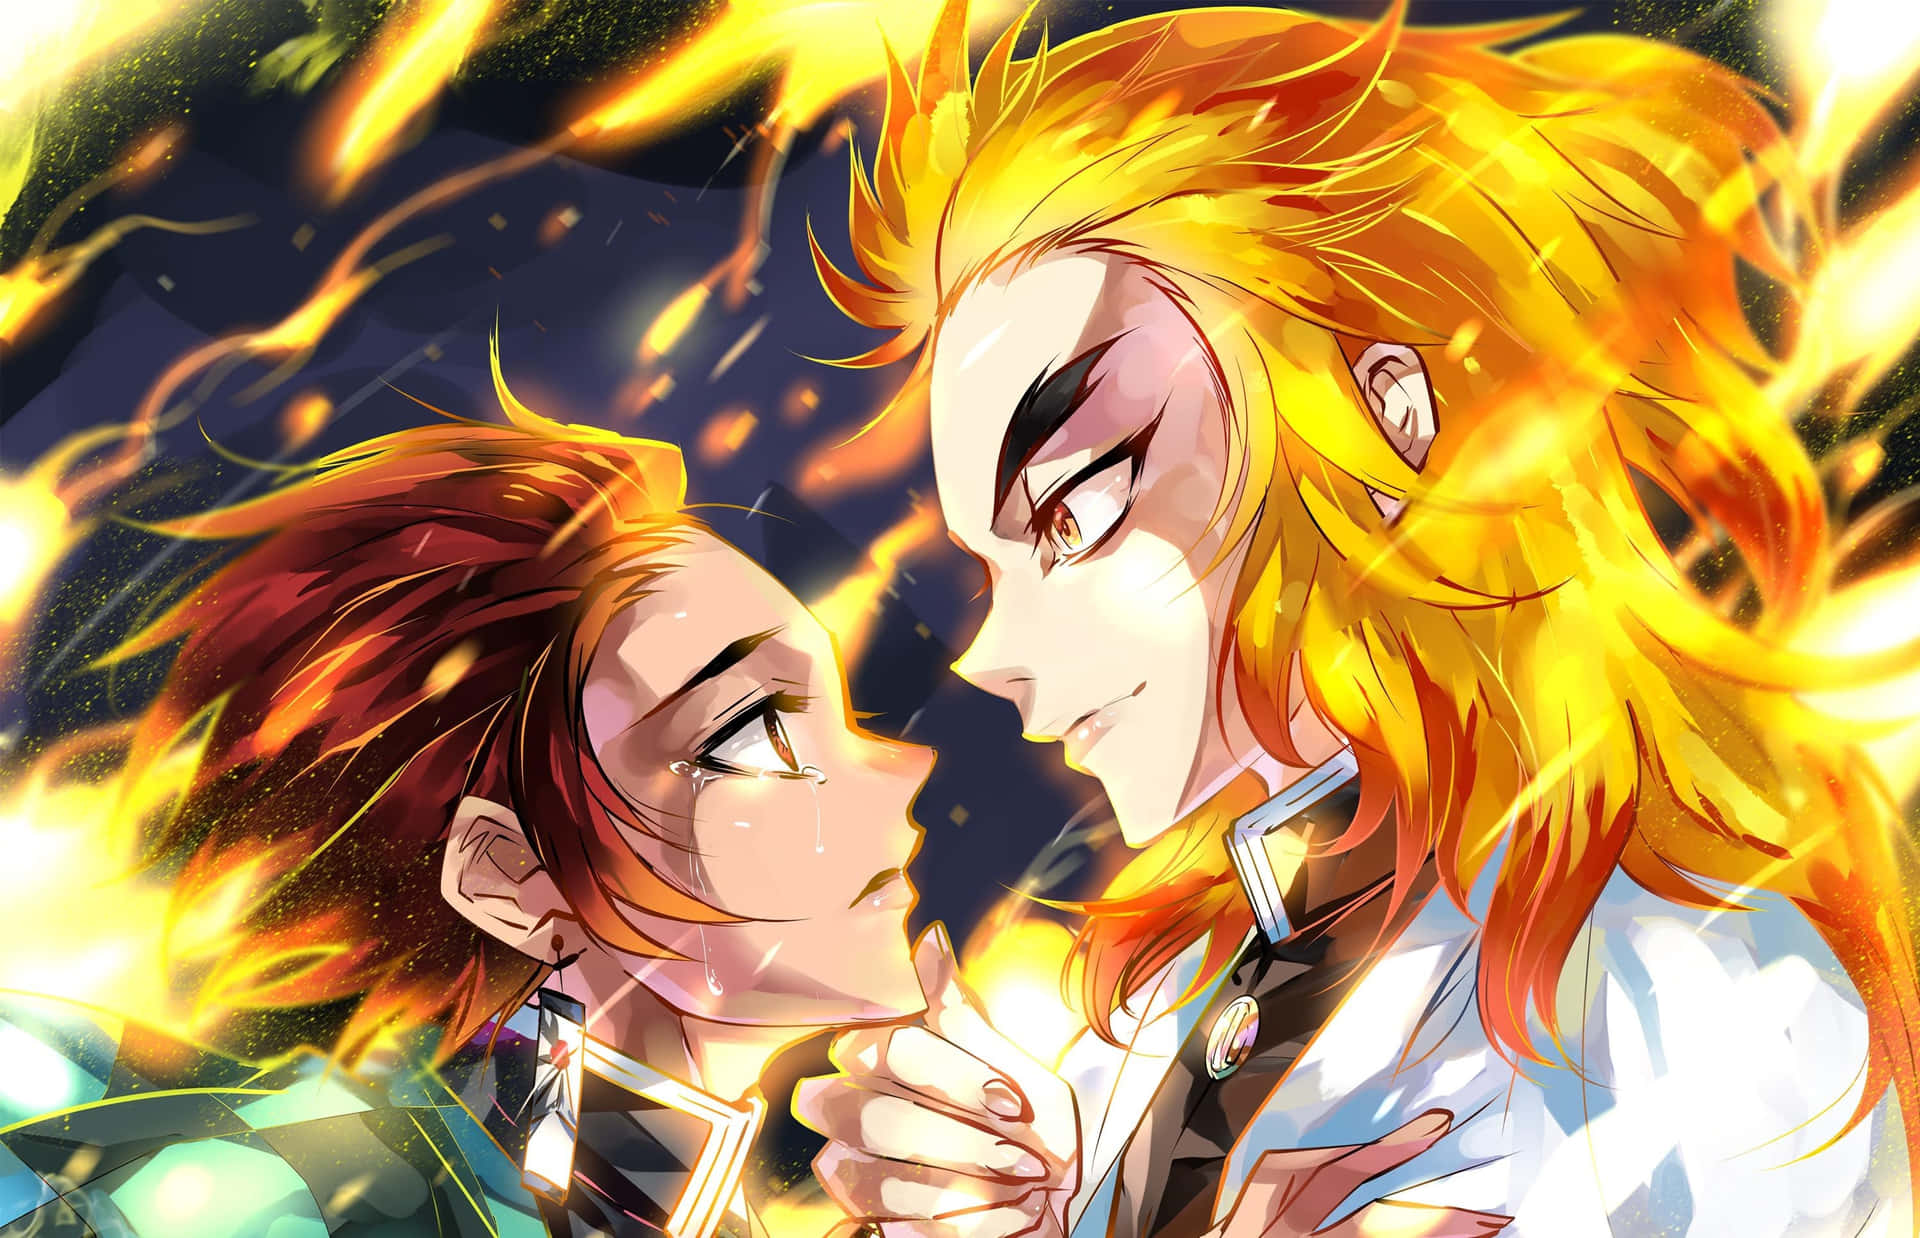 Rengoku and Tanjiro - A Fiery Duo in the World of Demon Slayer Wallpaper